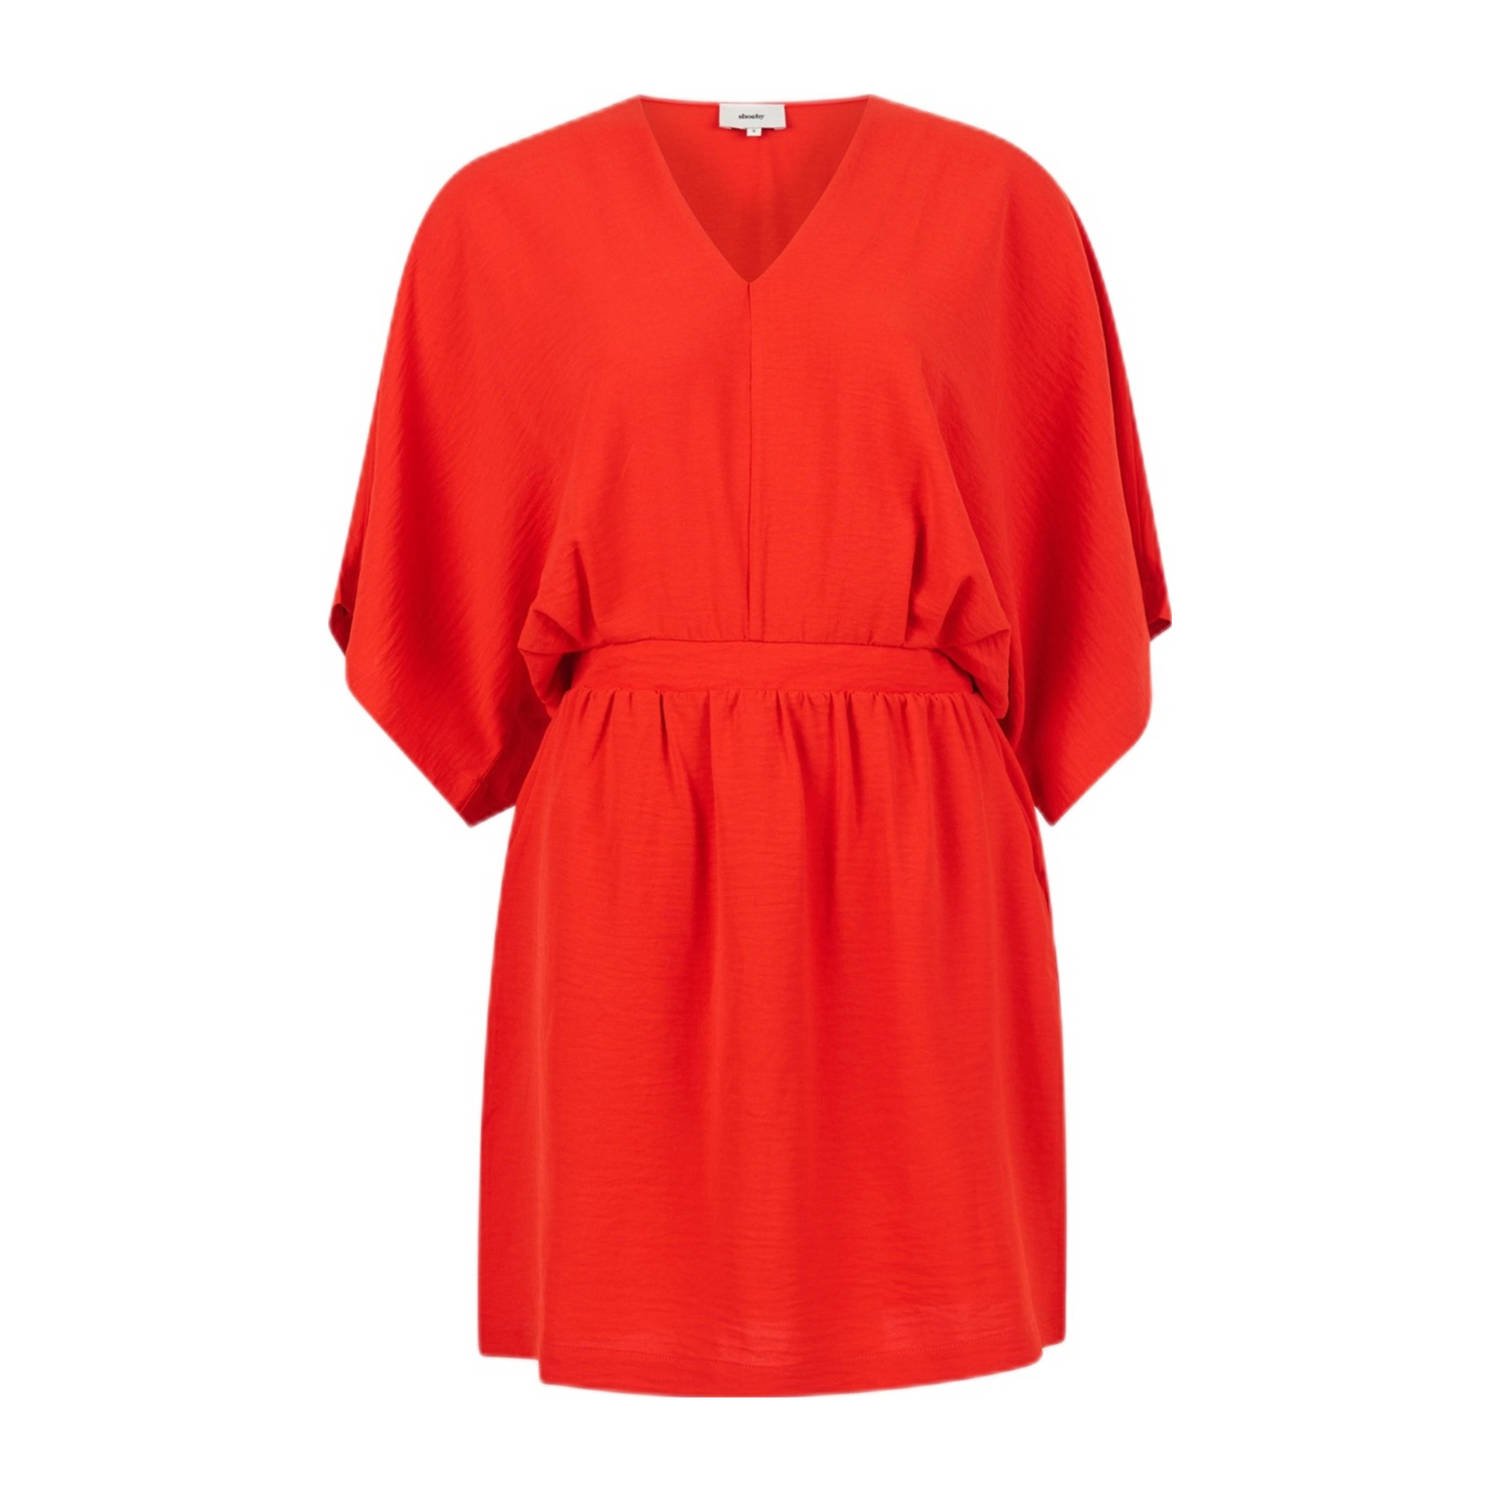 Shoeby jurk rood